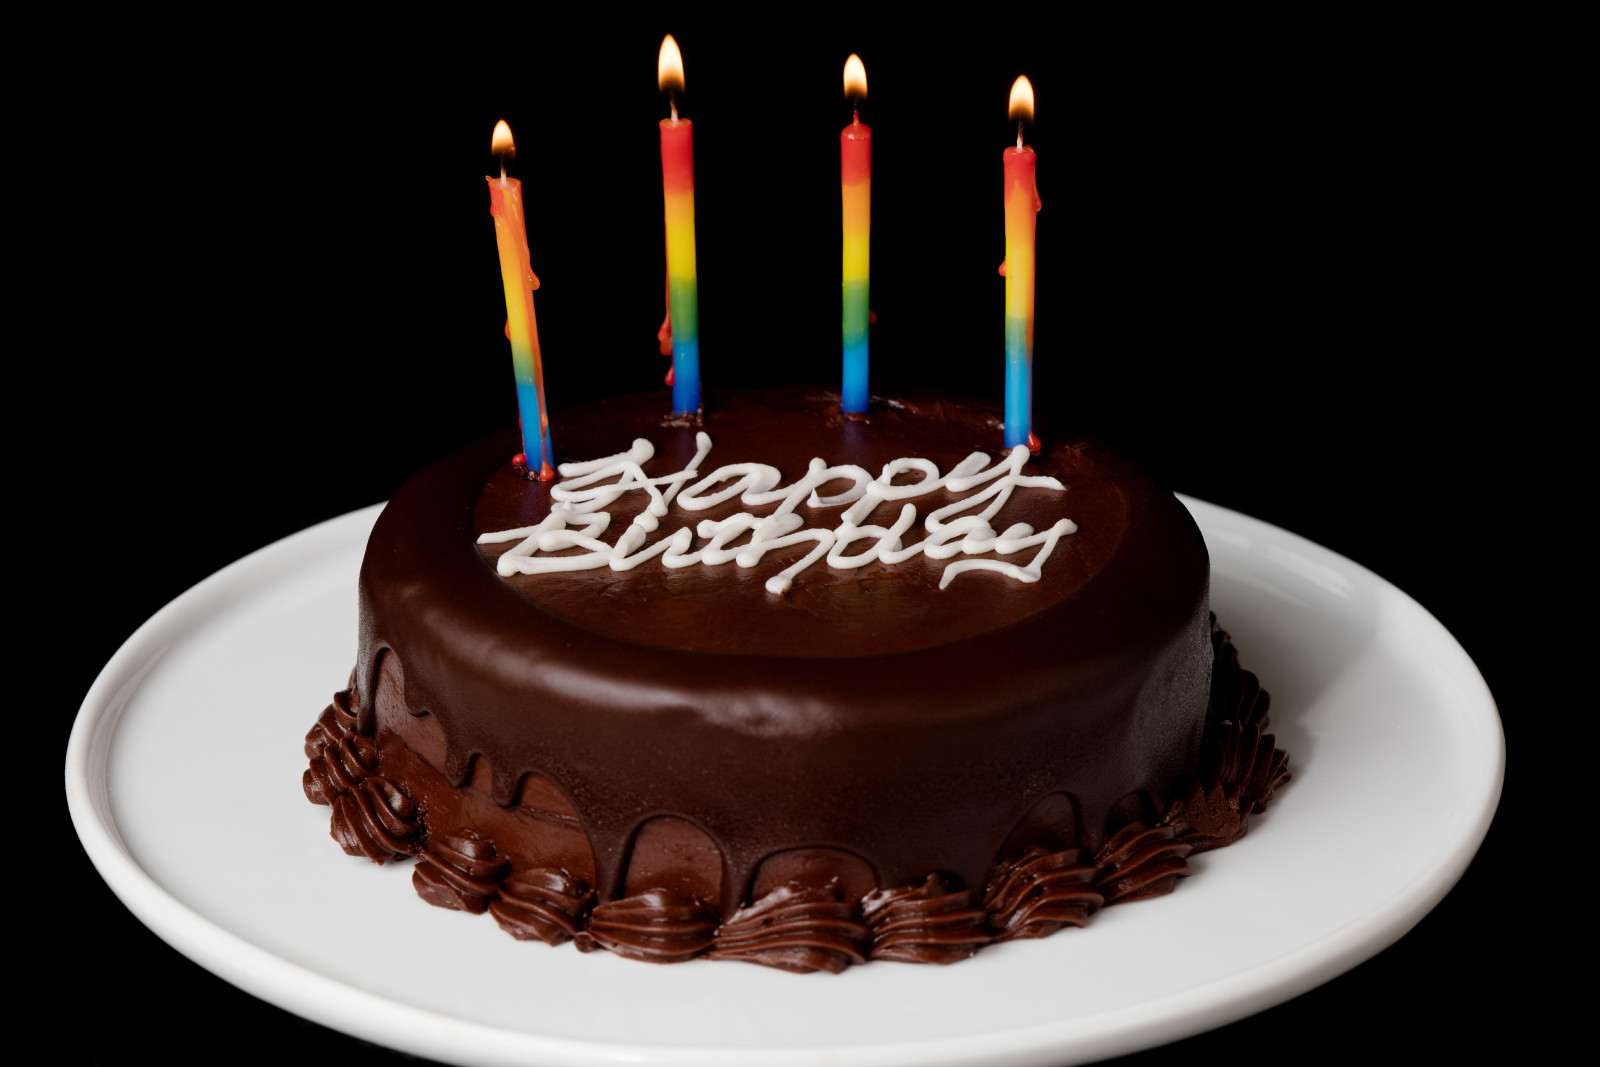 Best ideas about Chocolate Birthday Cake Images
. Save or Pin 2 Layer Chocolate Birthday Cake Now.